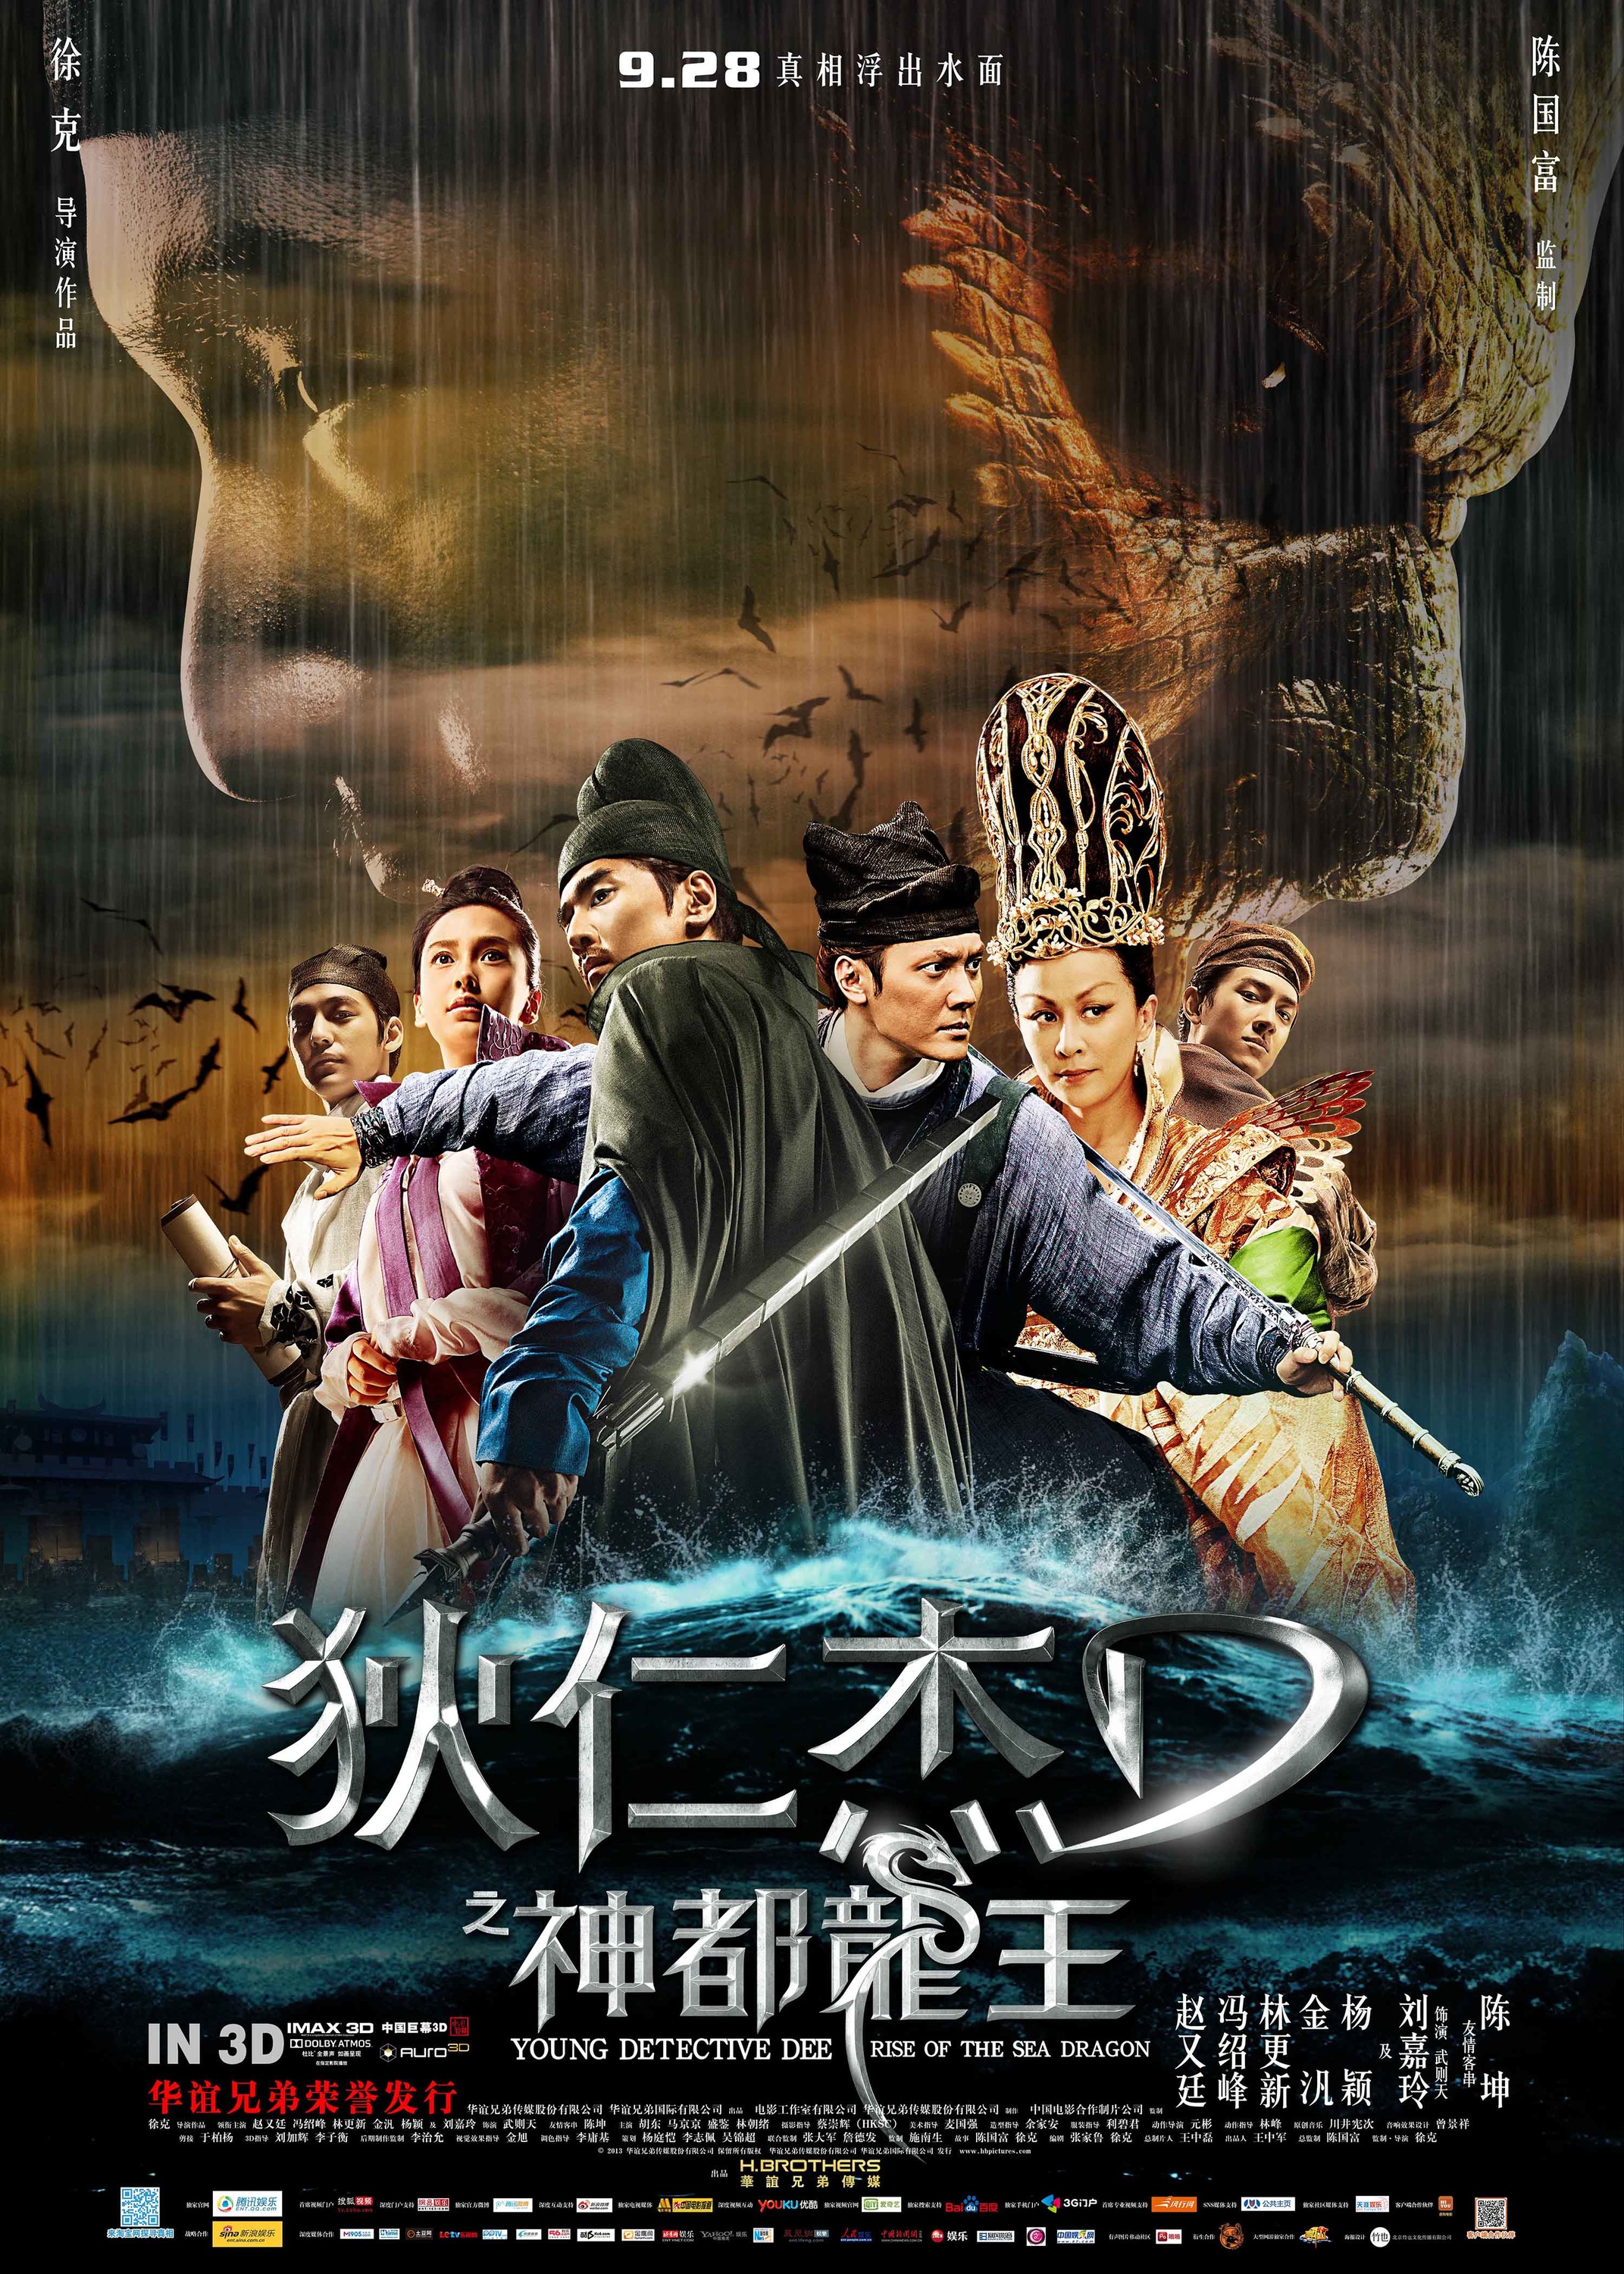 Mega Sized Movie Poster Image for Di renjie: Shen du long wang (#1 of 2)